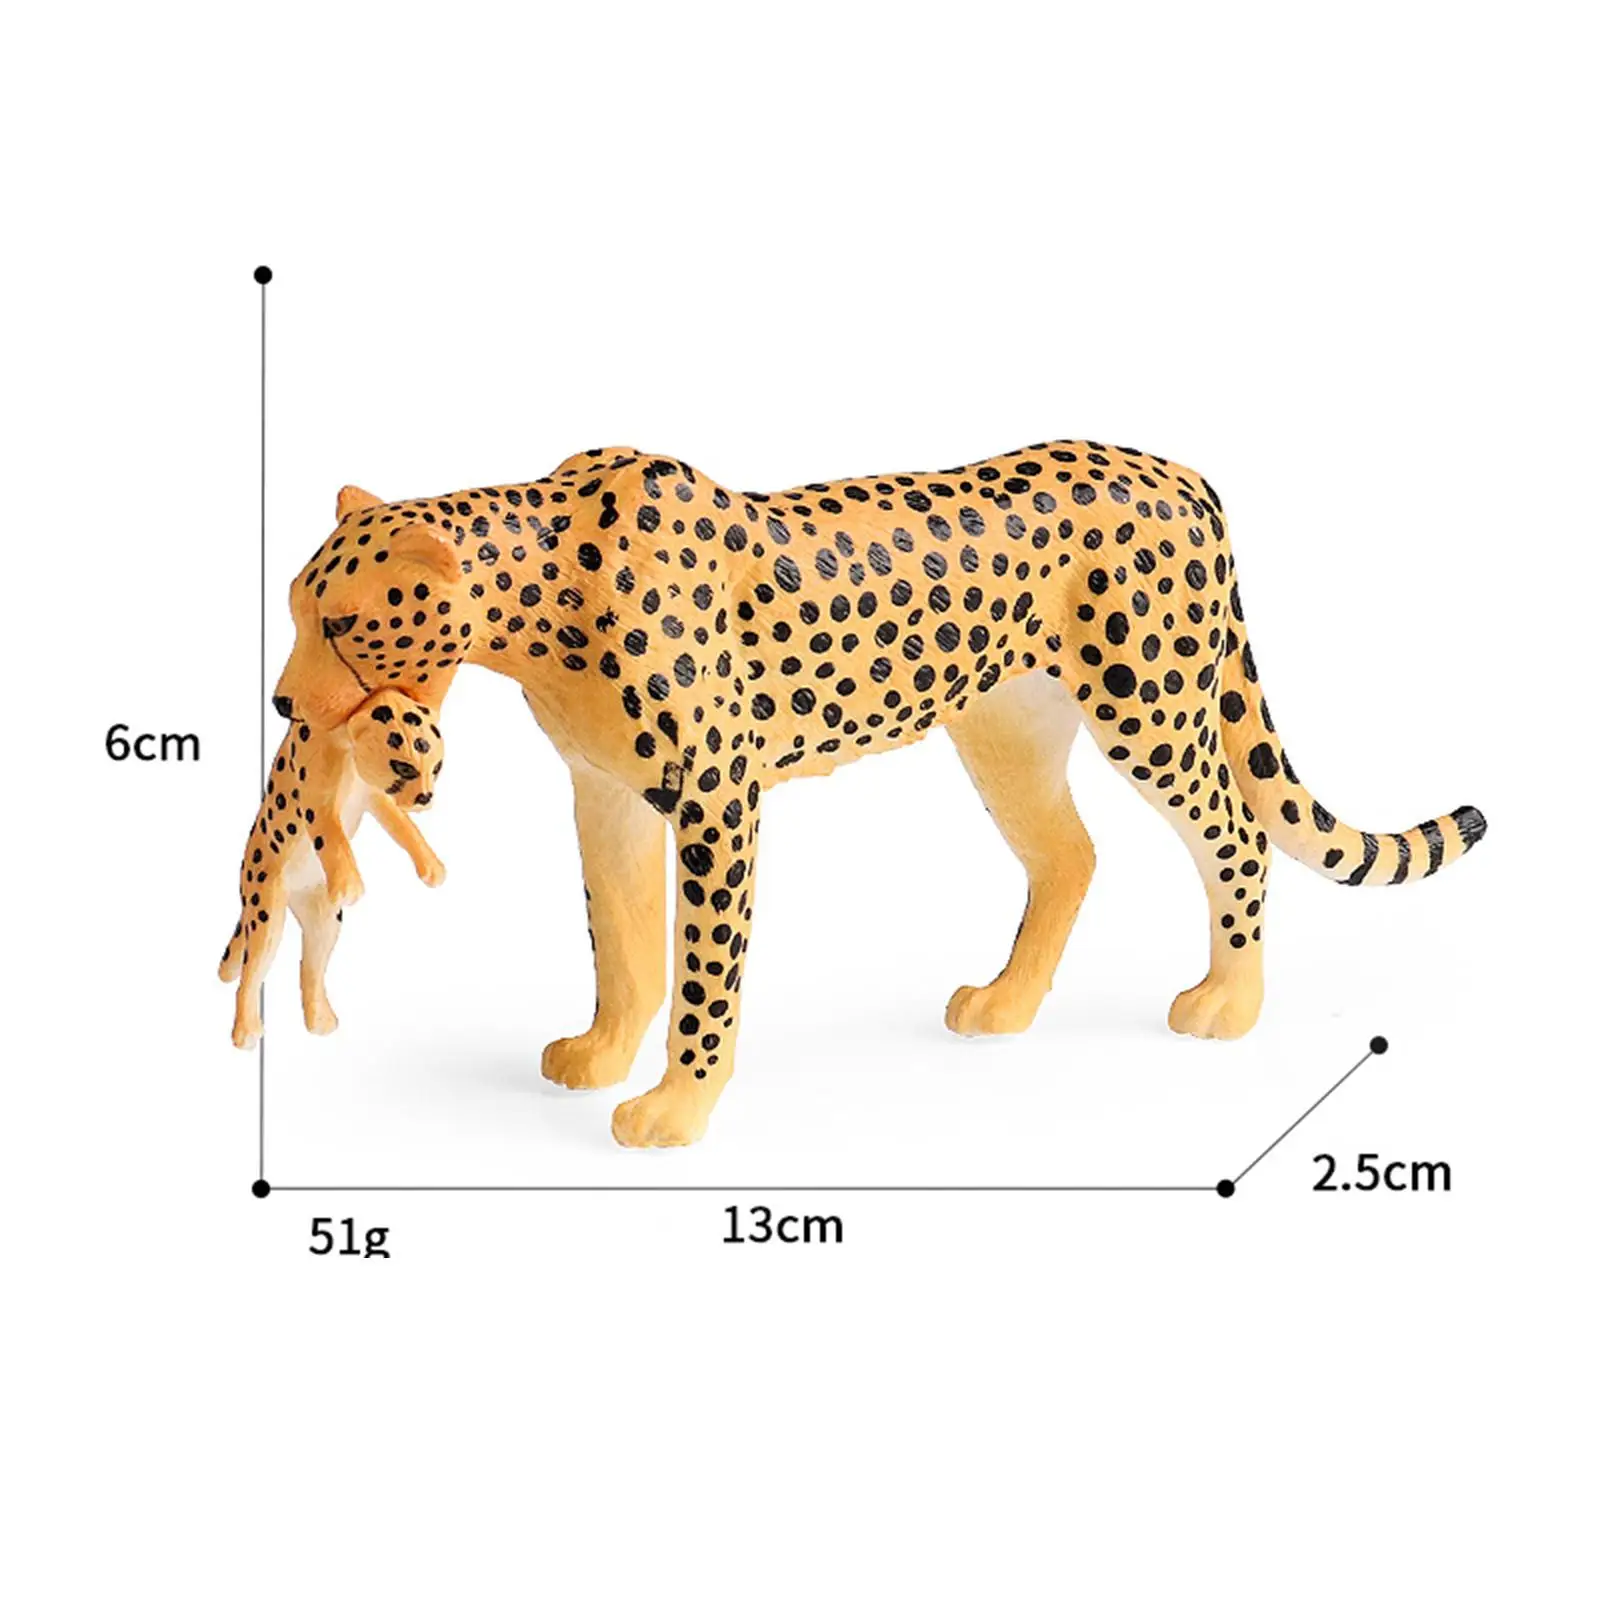 Leopard Figurine Preschool Realistic Wildlife Animal Statue for Holiday Gift